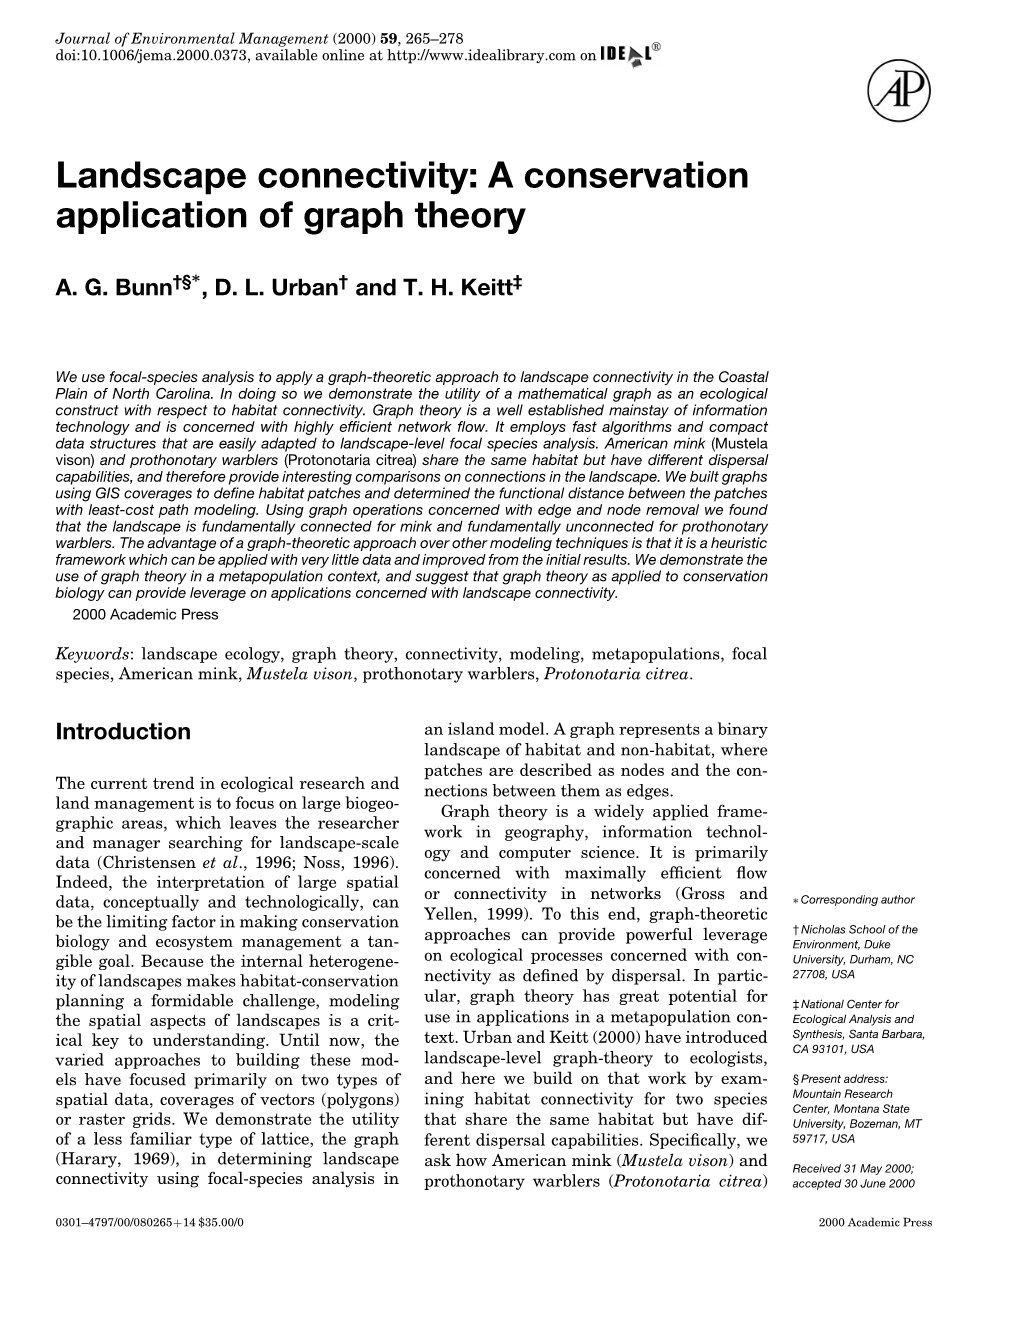 Landscape Connectivity: a Conservation Application of Graph